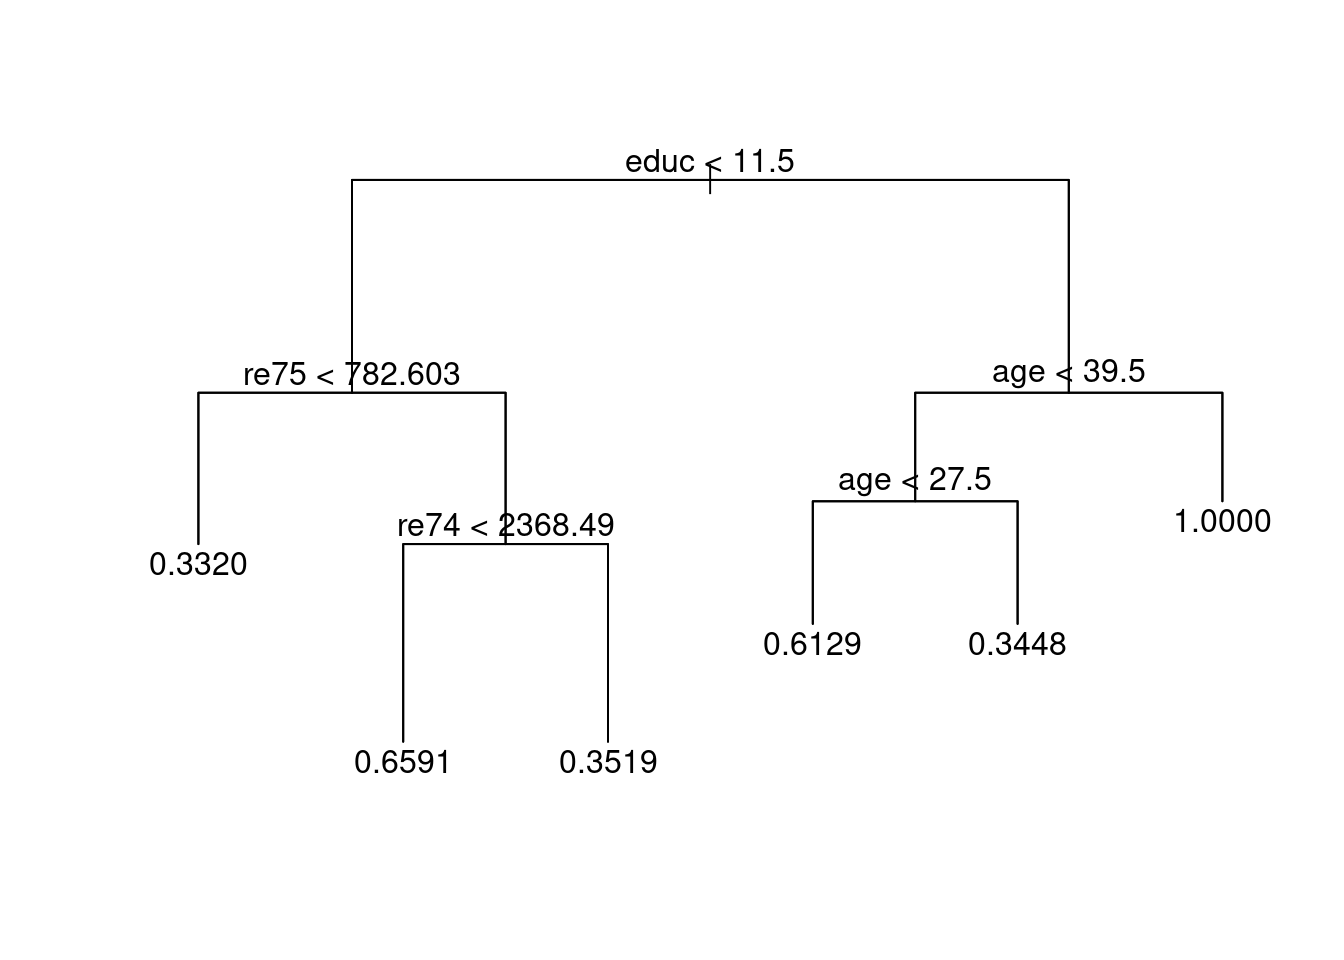 Classification tree